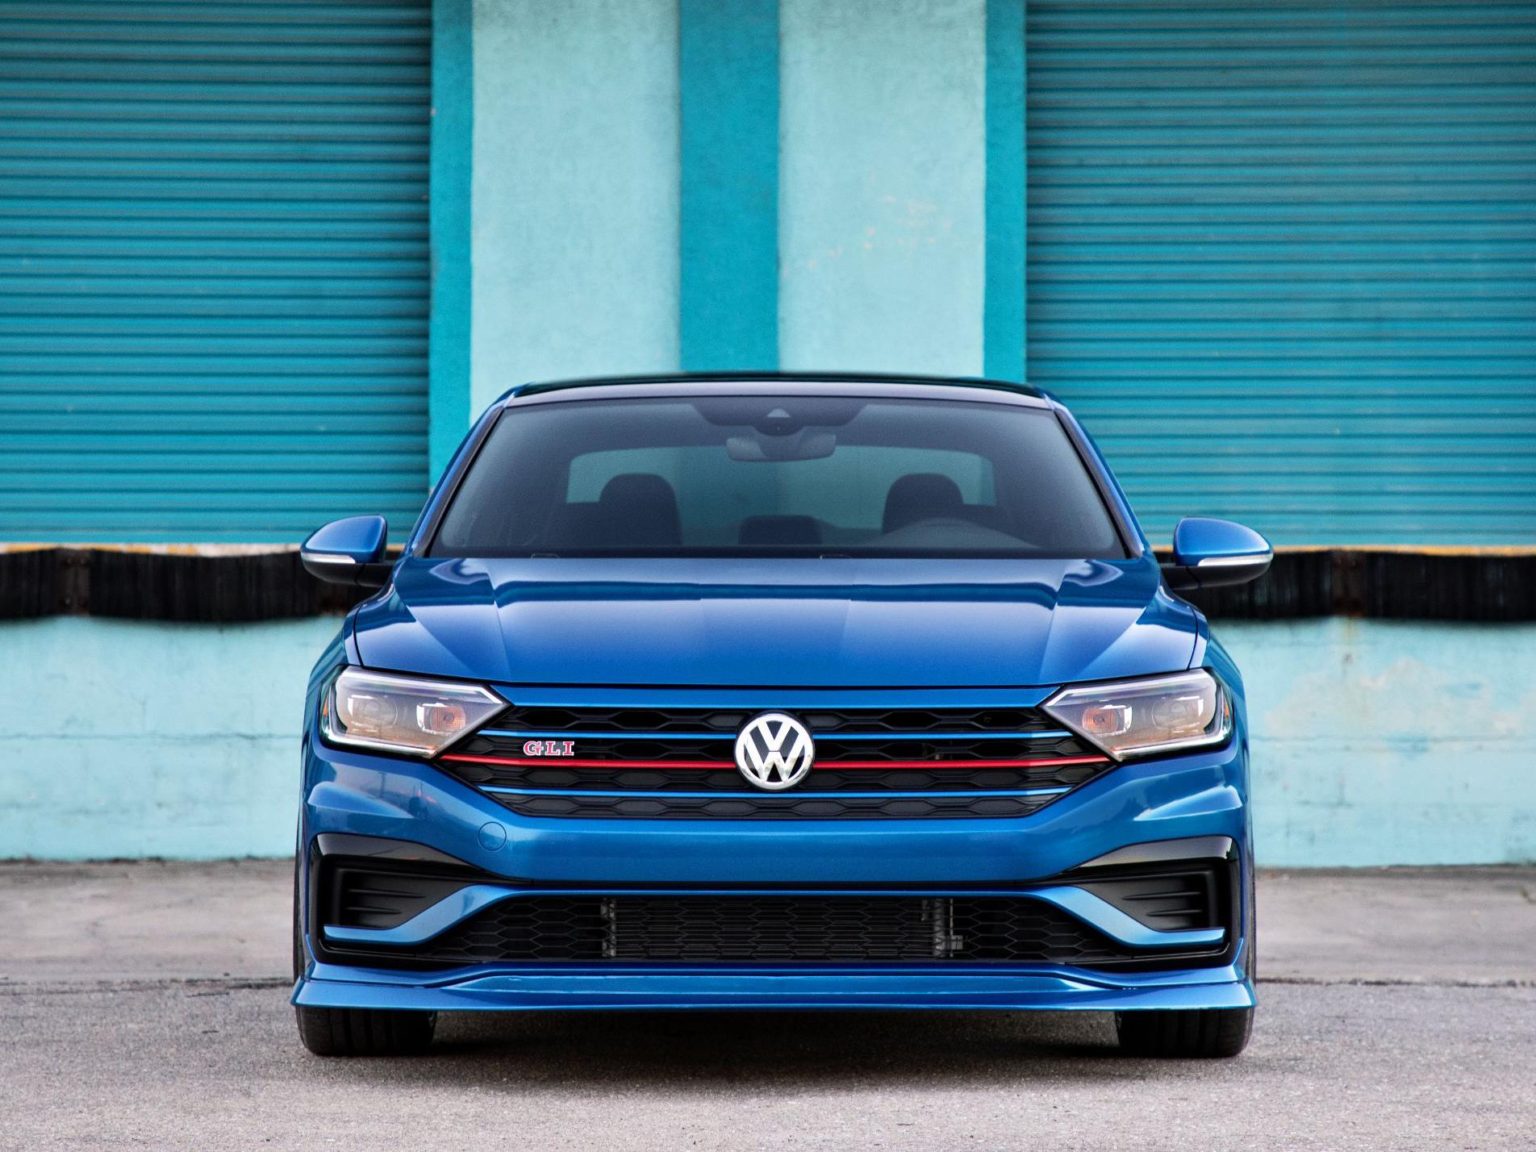 Volkswagen has added new model to its Enthusiast Fleet.